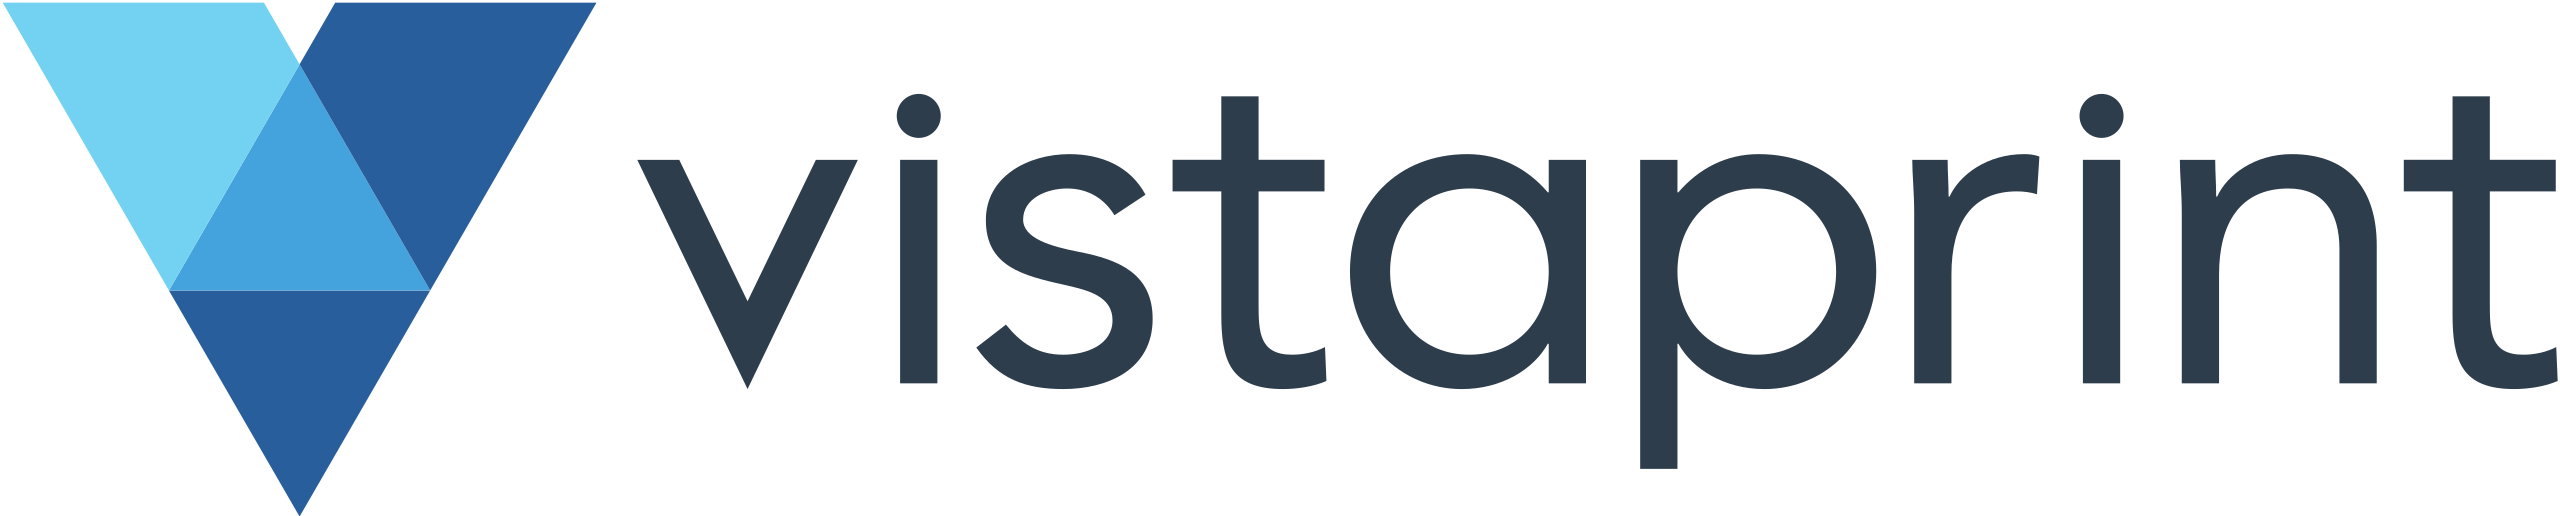 Vistaprint_logo.svg